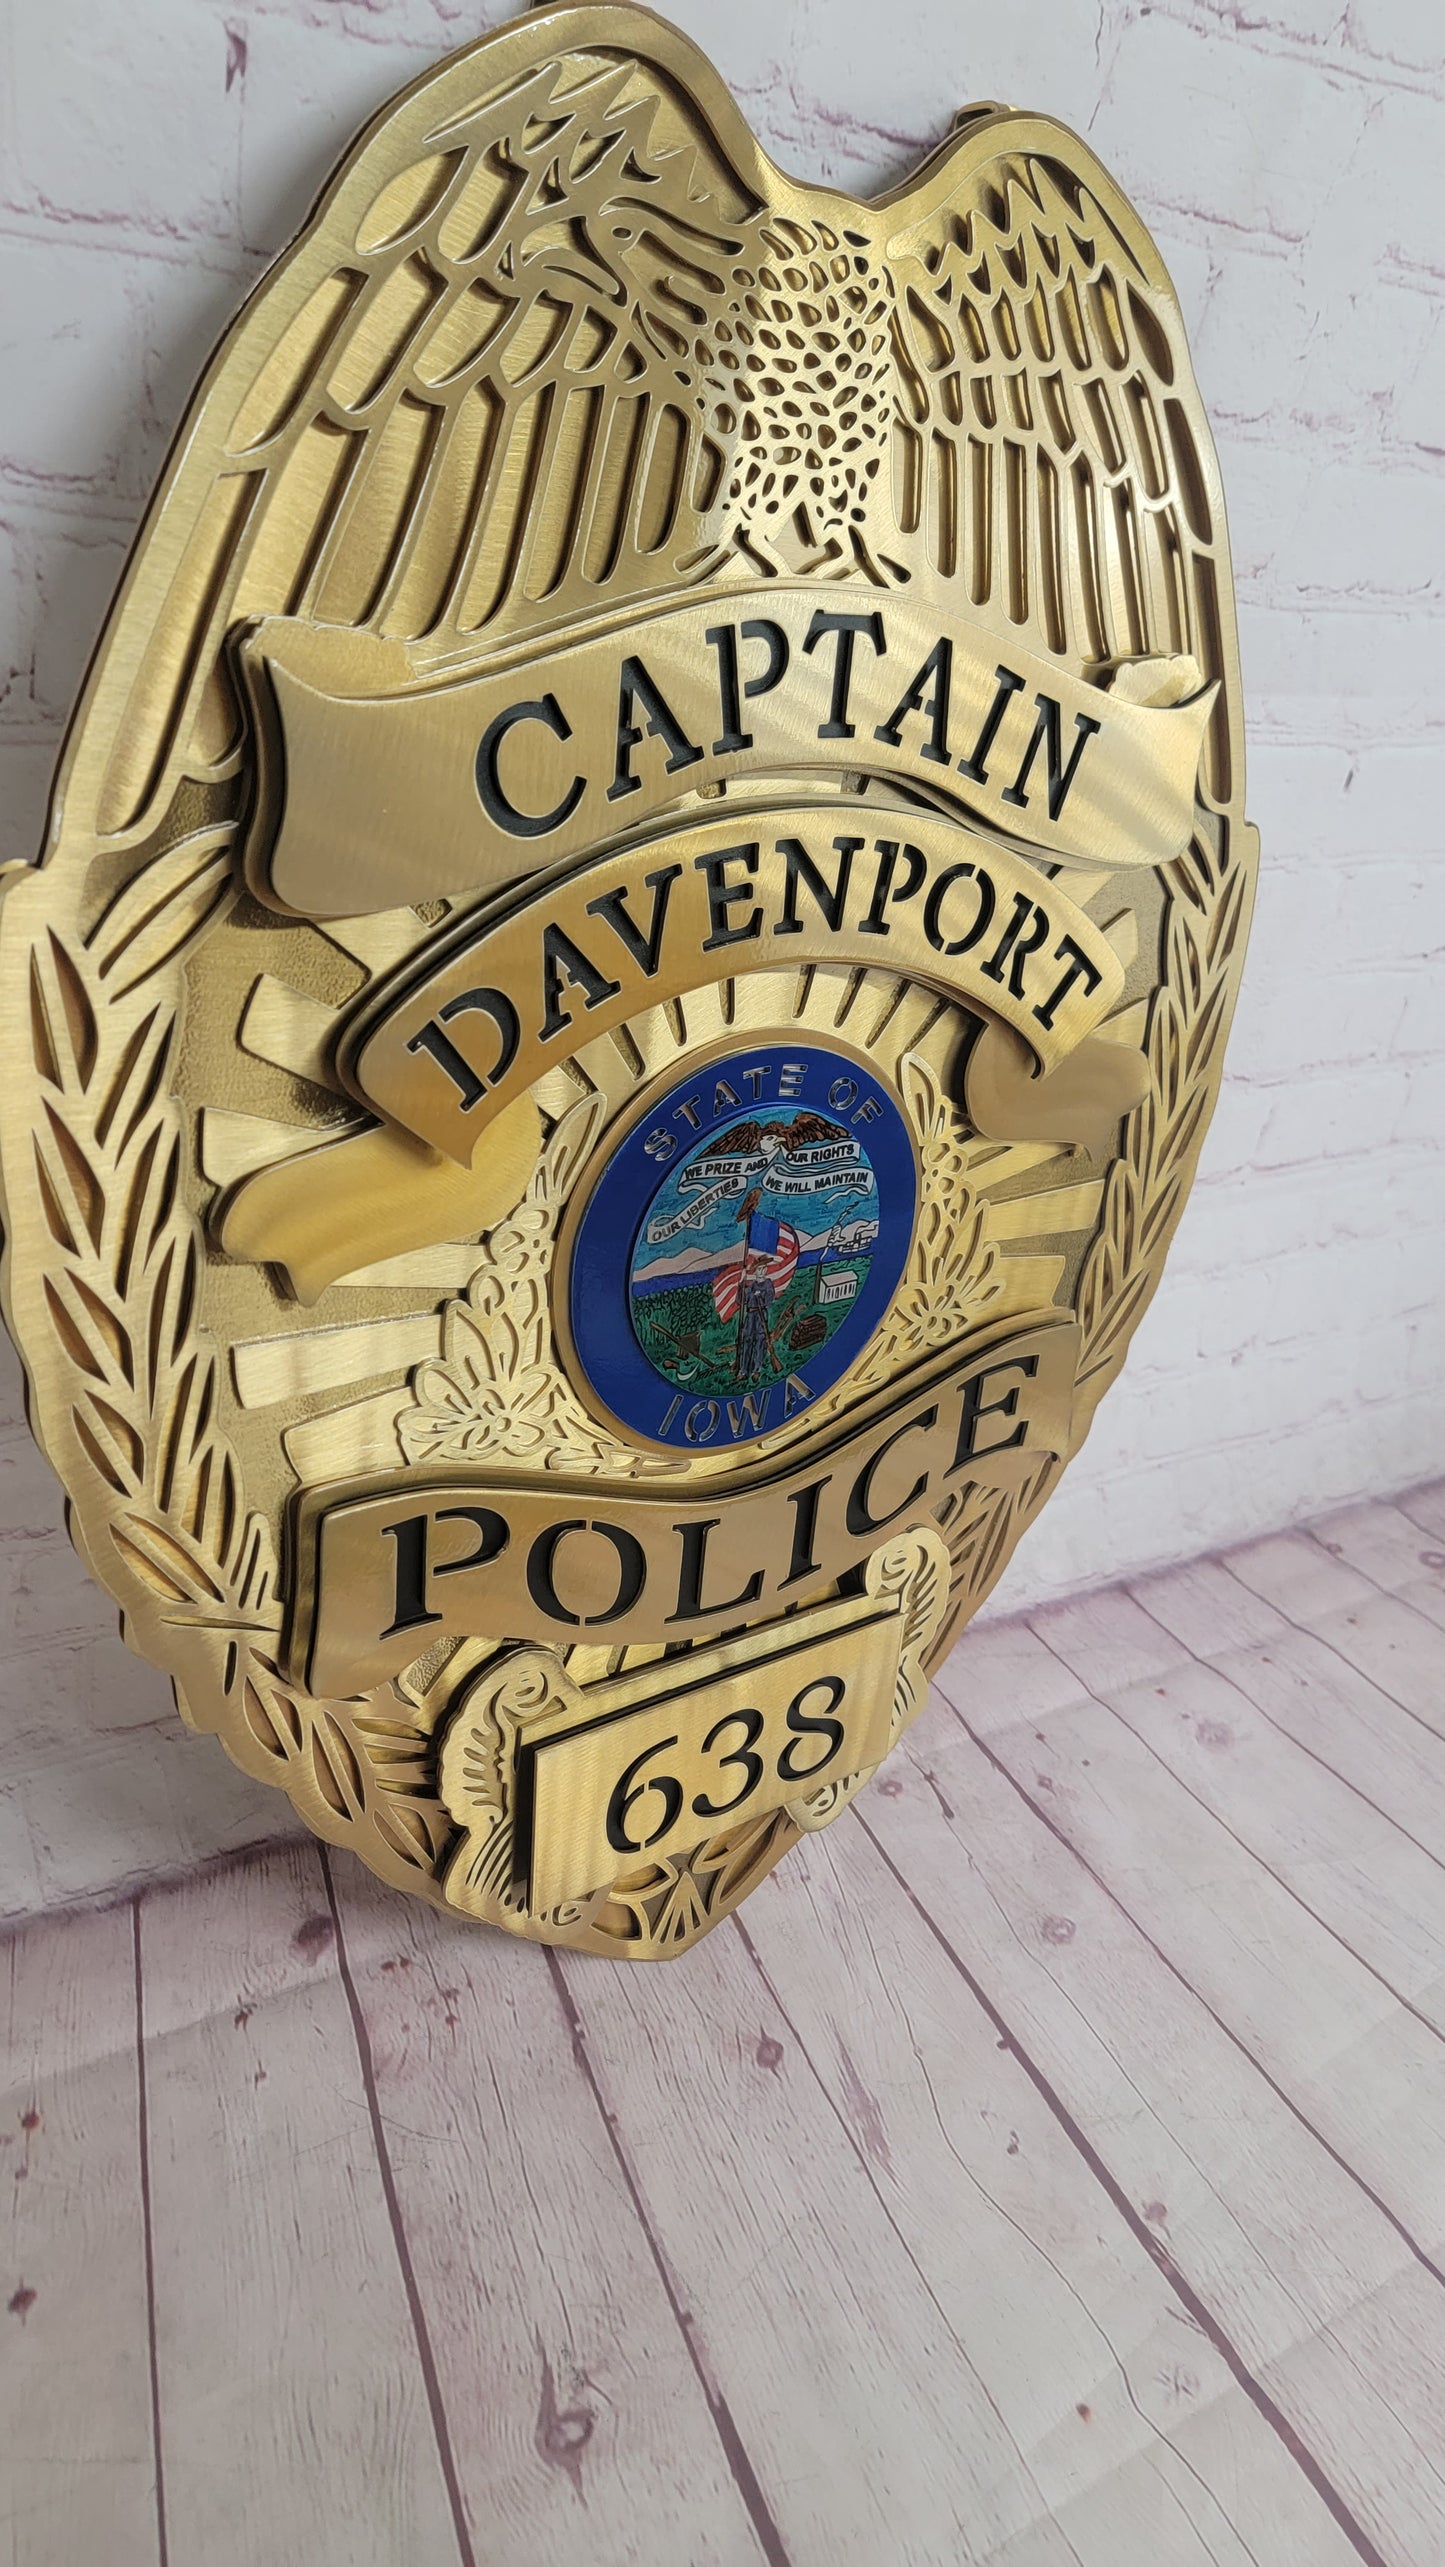 Davenport Police Captain Badge